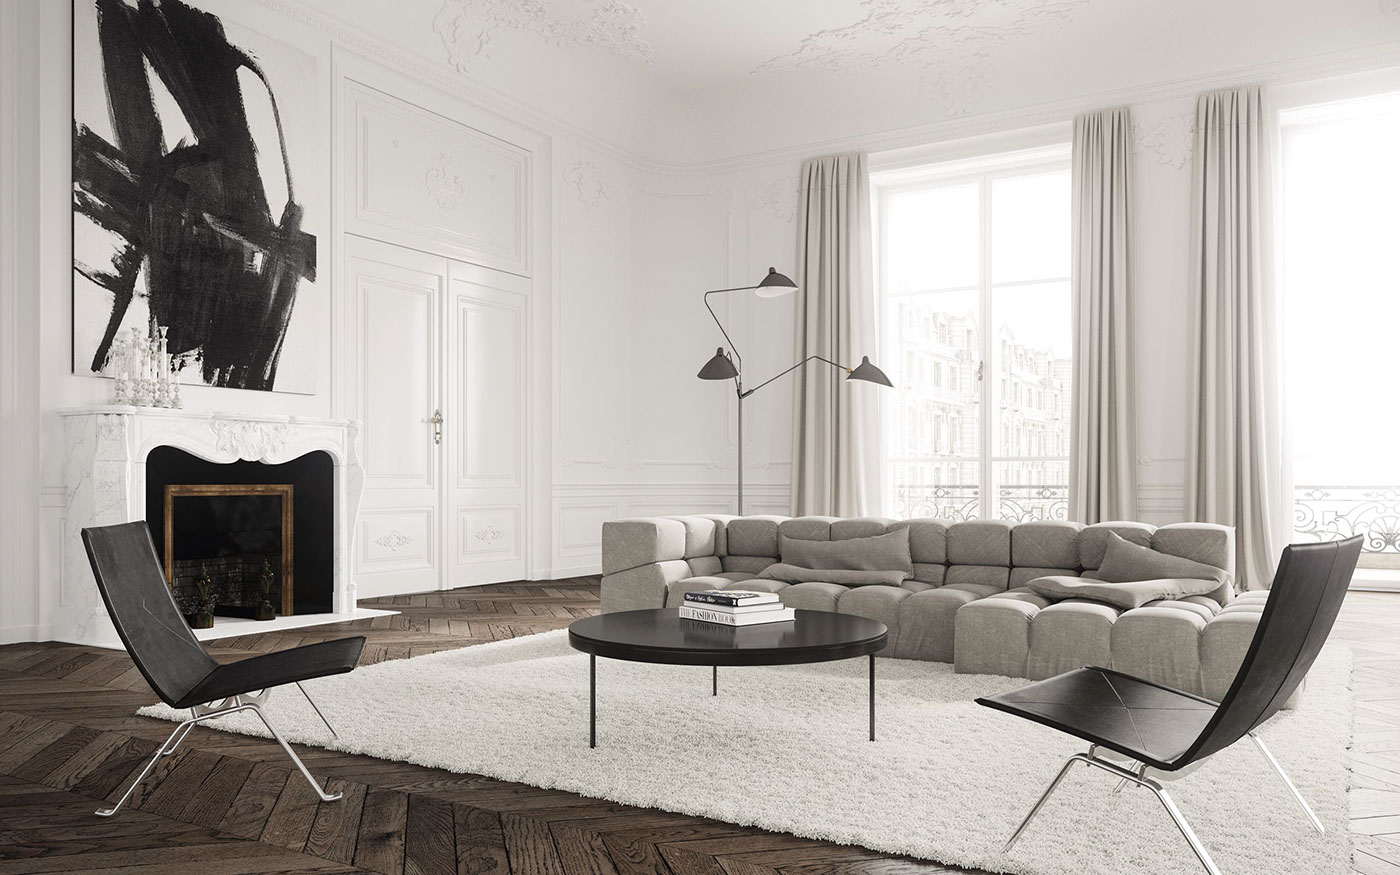 Jessica Vedel apartment Paris Parisian apartment Haussman visualization architectural visualization modern simple White